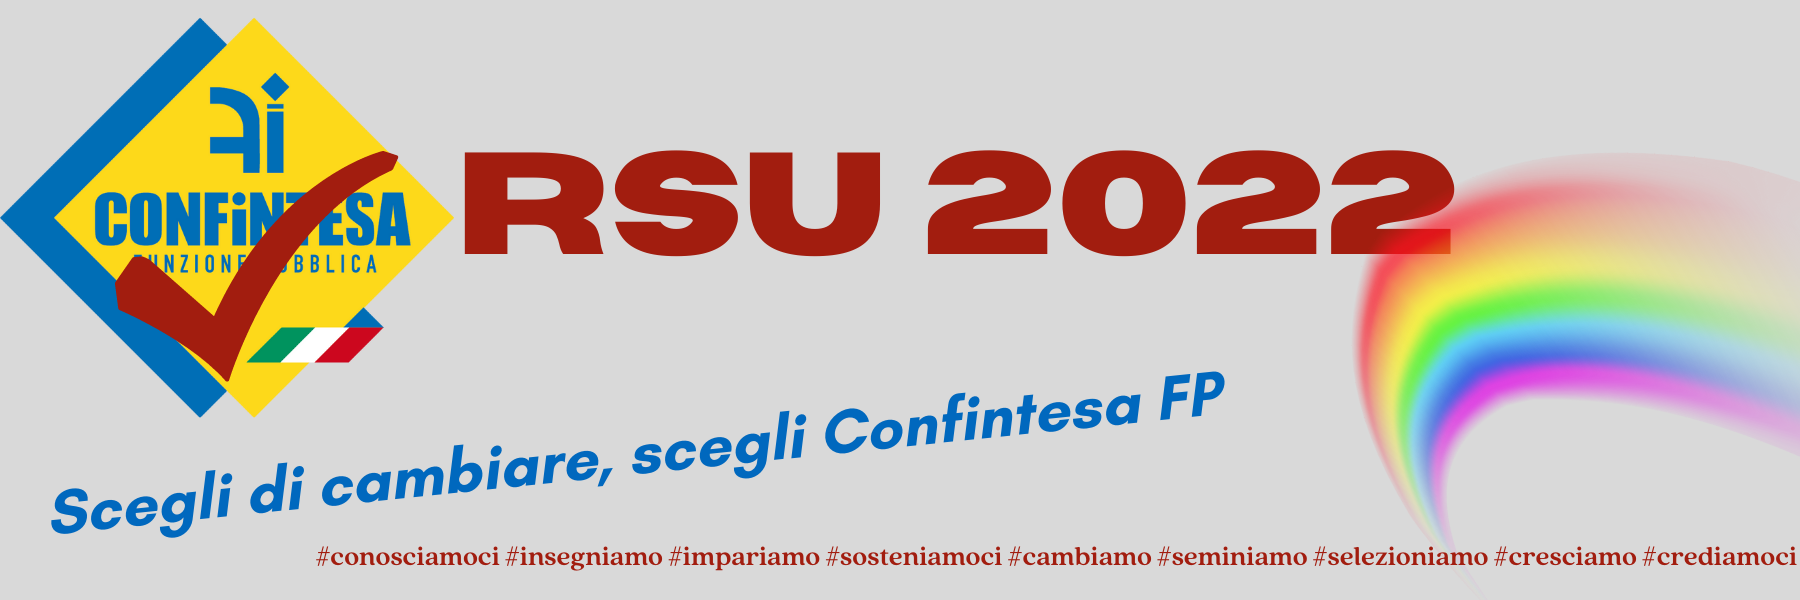 RSU 2022 Candidati con Confintesa FP